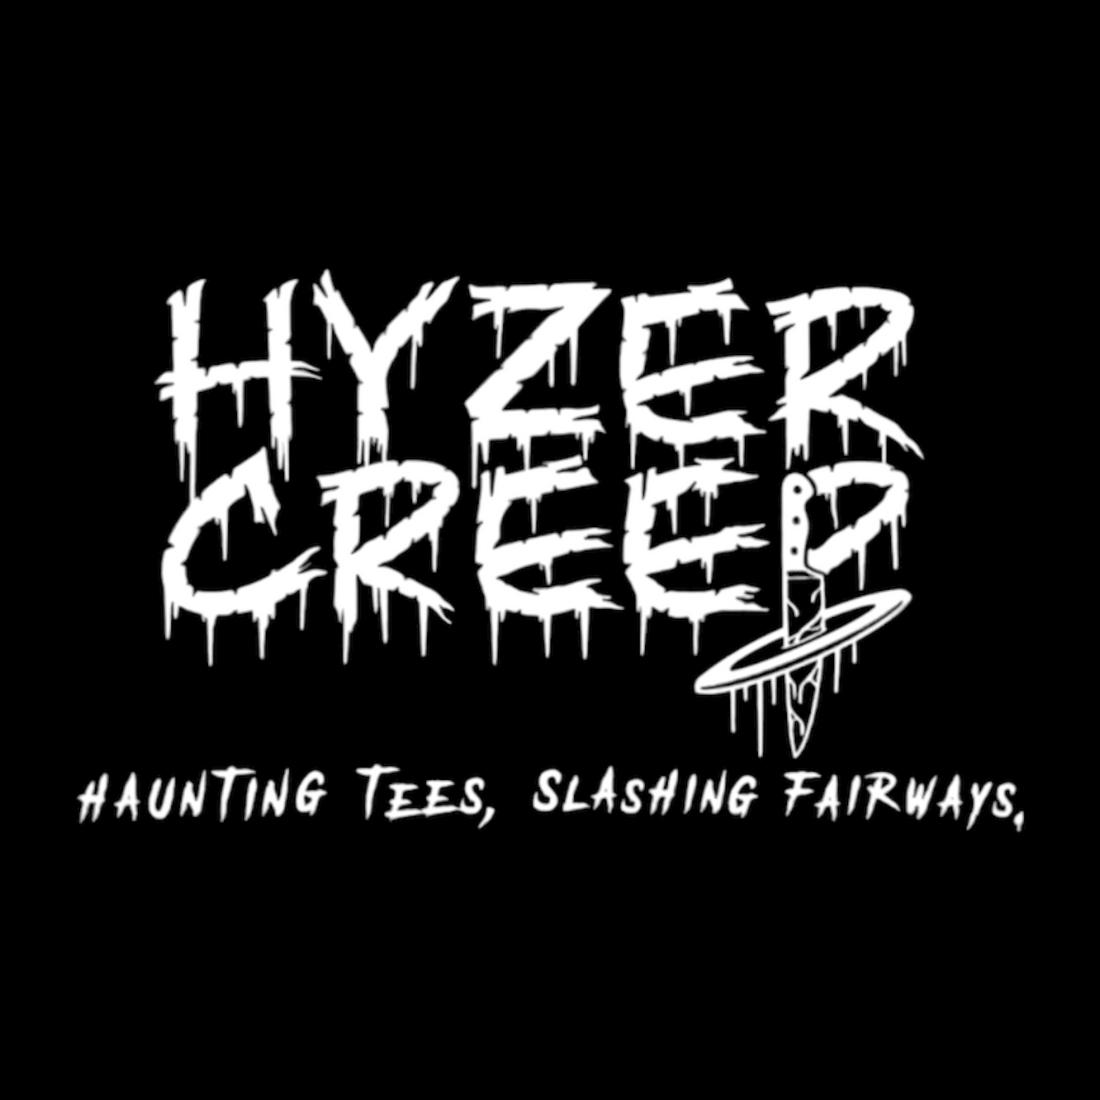 Hyzer Creep Disc Golf